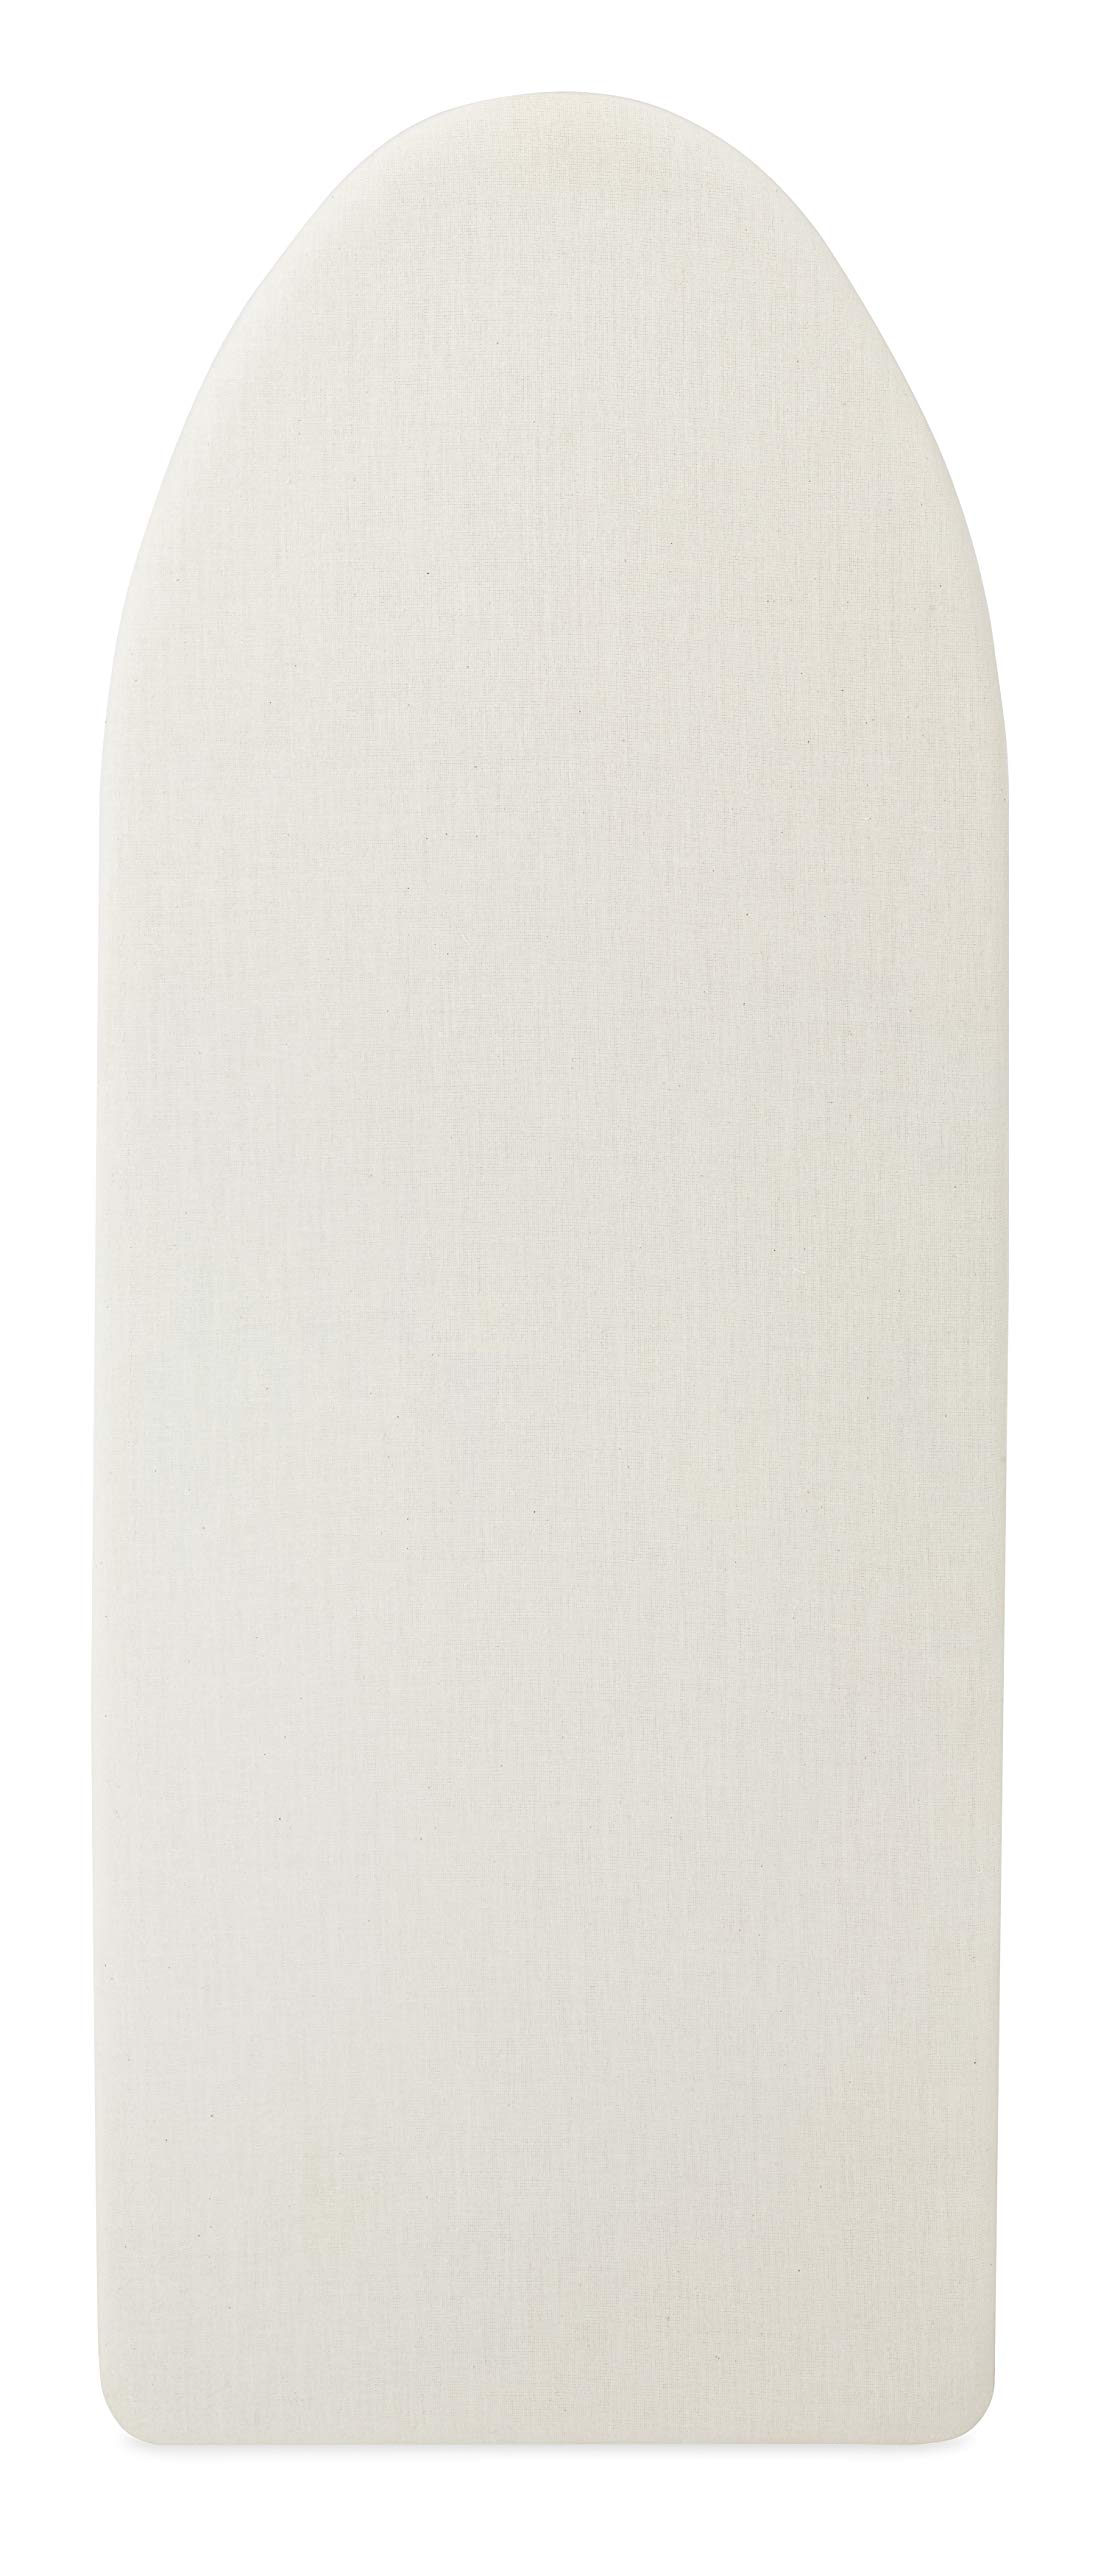 Whitmor Tabletop Ironing Board, Cream, 12.0x32.0x33.75